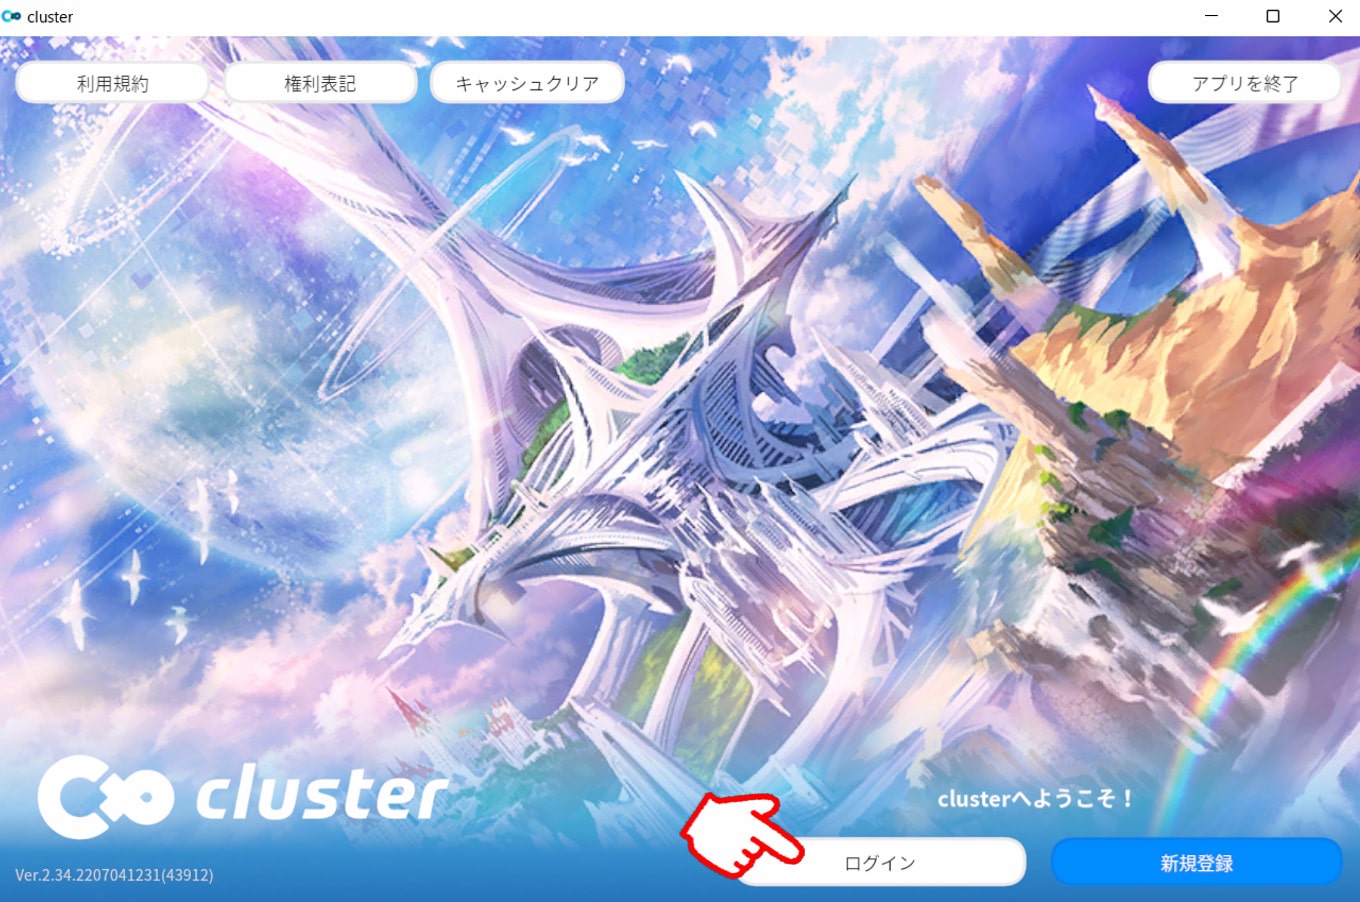 Clusterアプリのログイン画面